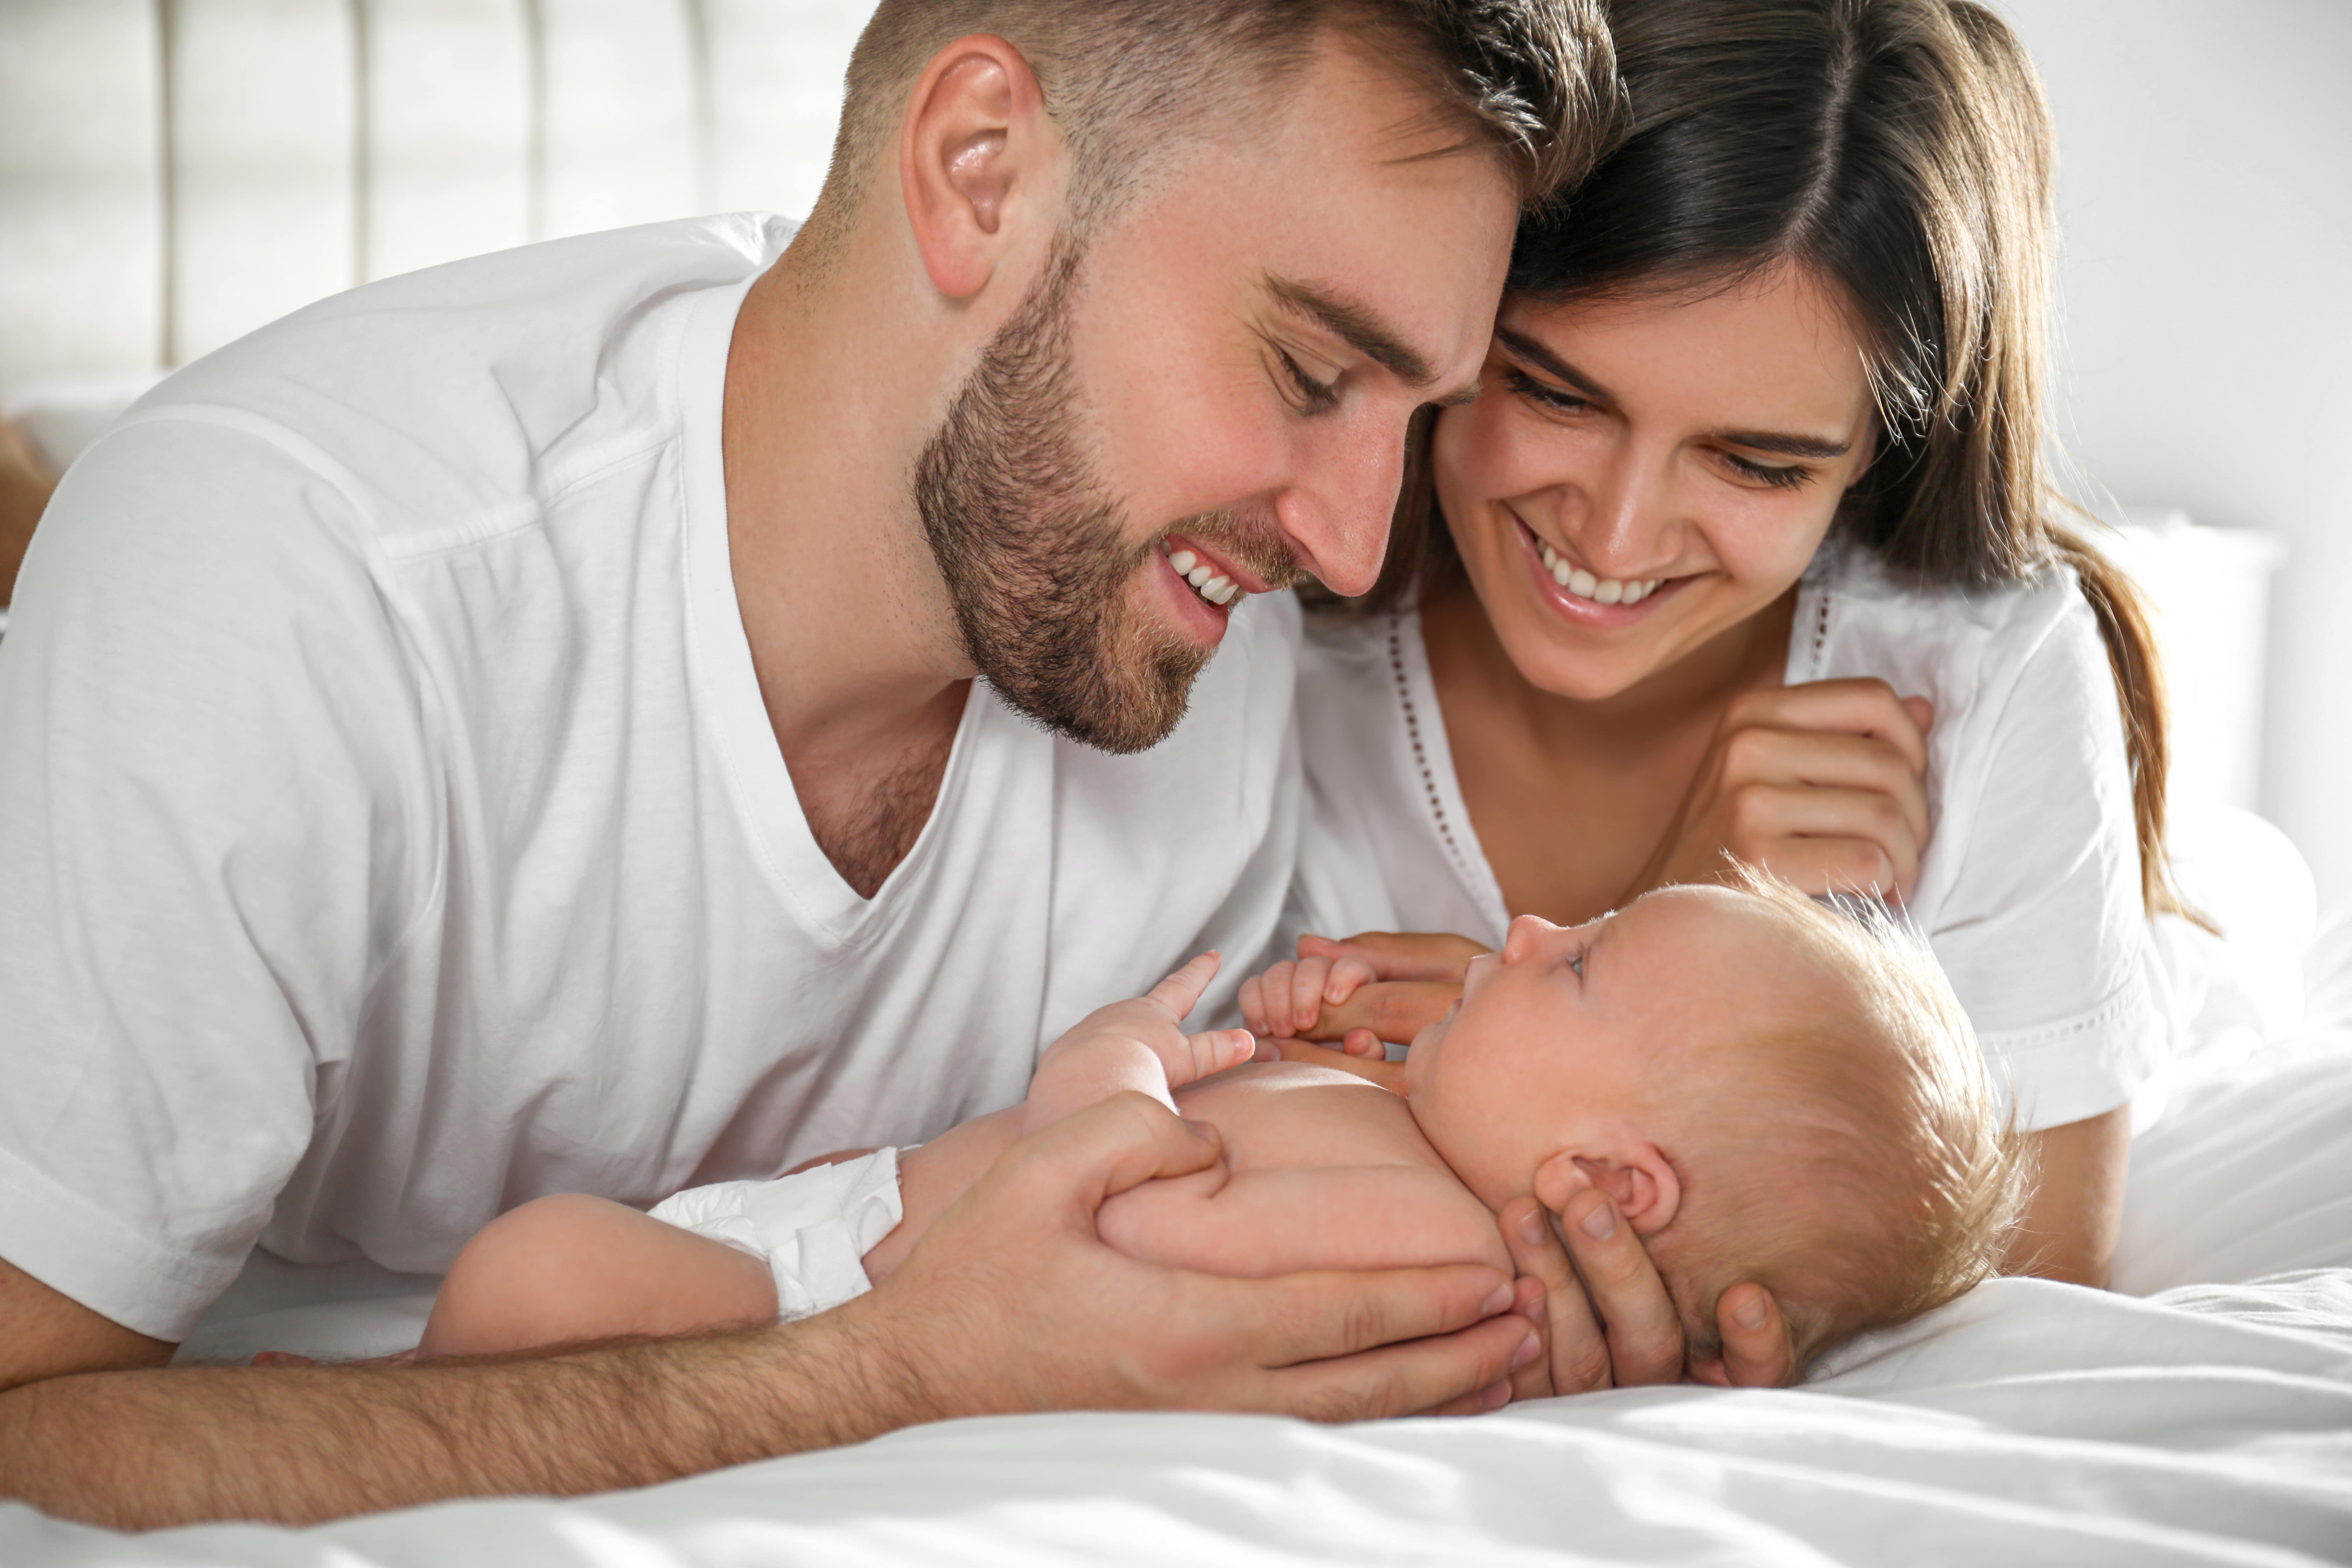 6 основних причин плачу новонародженого